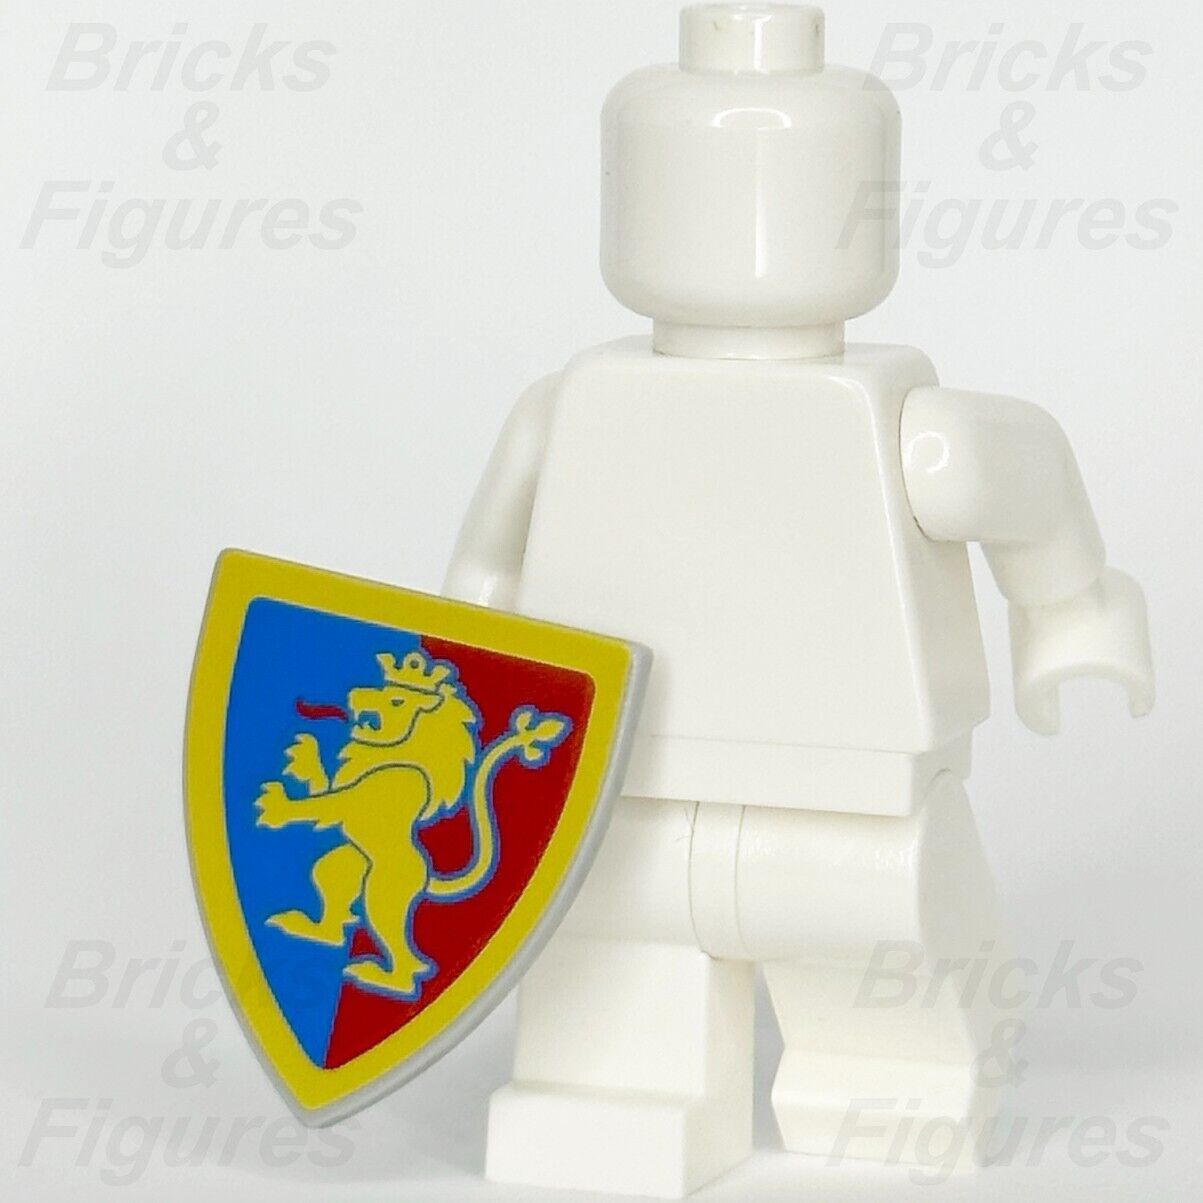 LEGO Castle Royal Lion Knights Shield Minifigure Weapon Part Yellow 10305 x 1 - Bricks & Figures